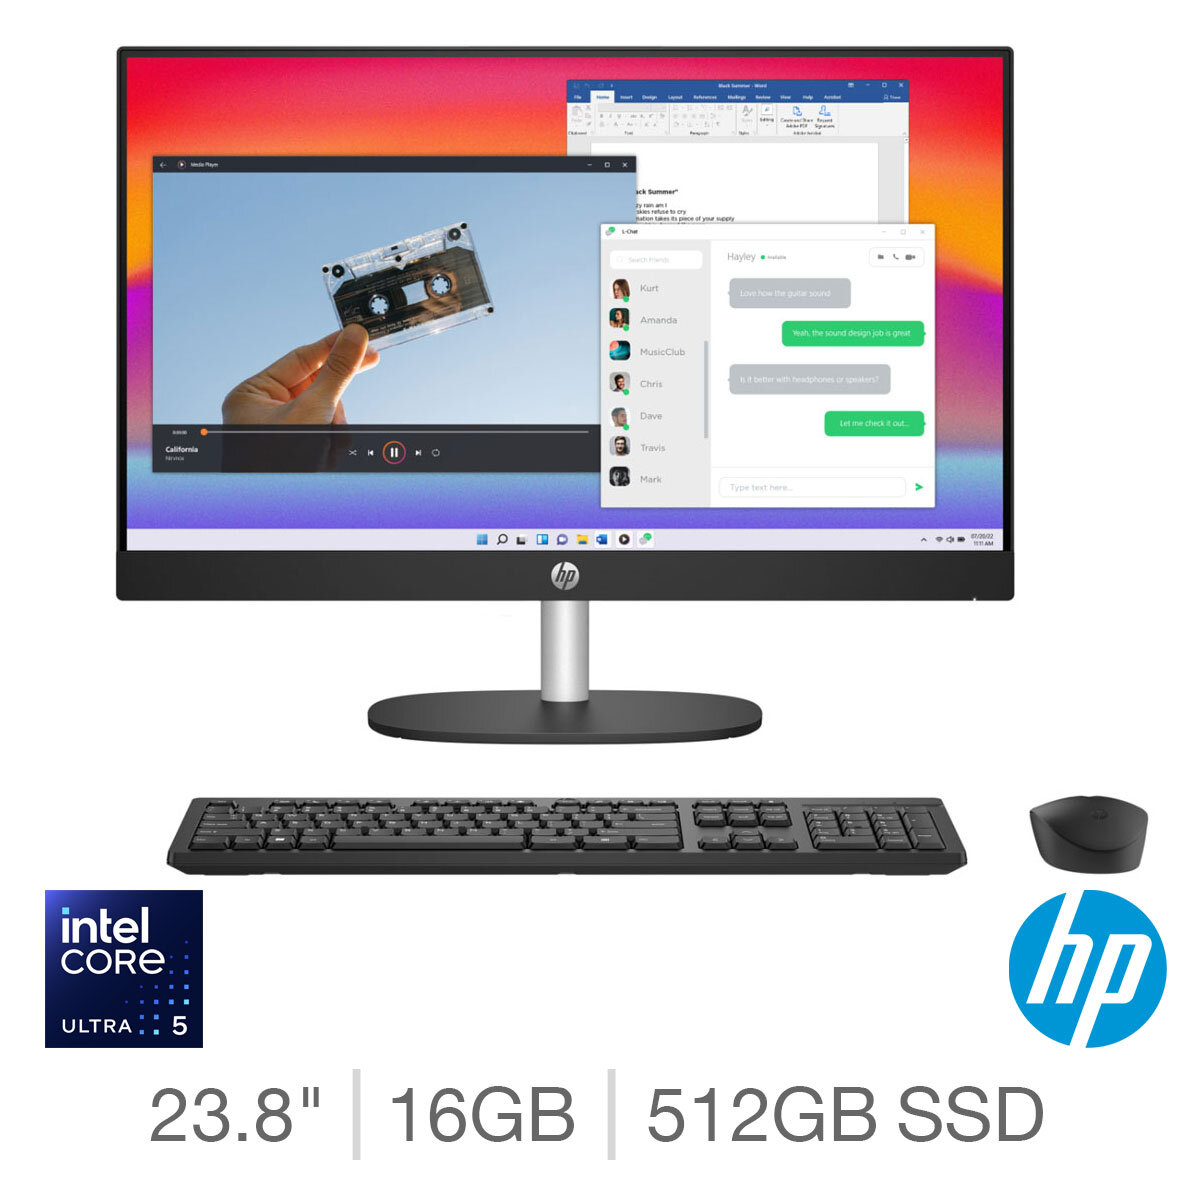 HP Intel Ultra 5-125U, 16GB RAM, 512GB SSD, 23.8 Inch All in One Desktop PC, 24-ca1000na at costco.co.uk